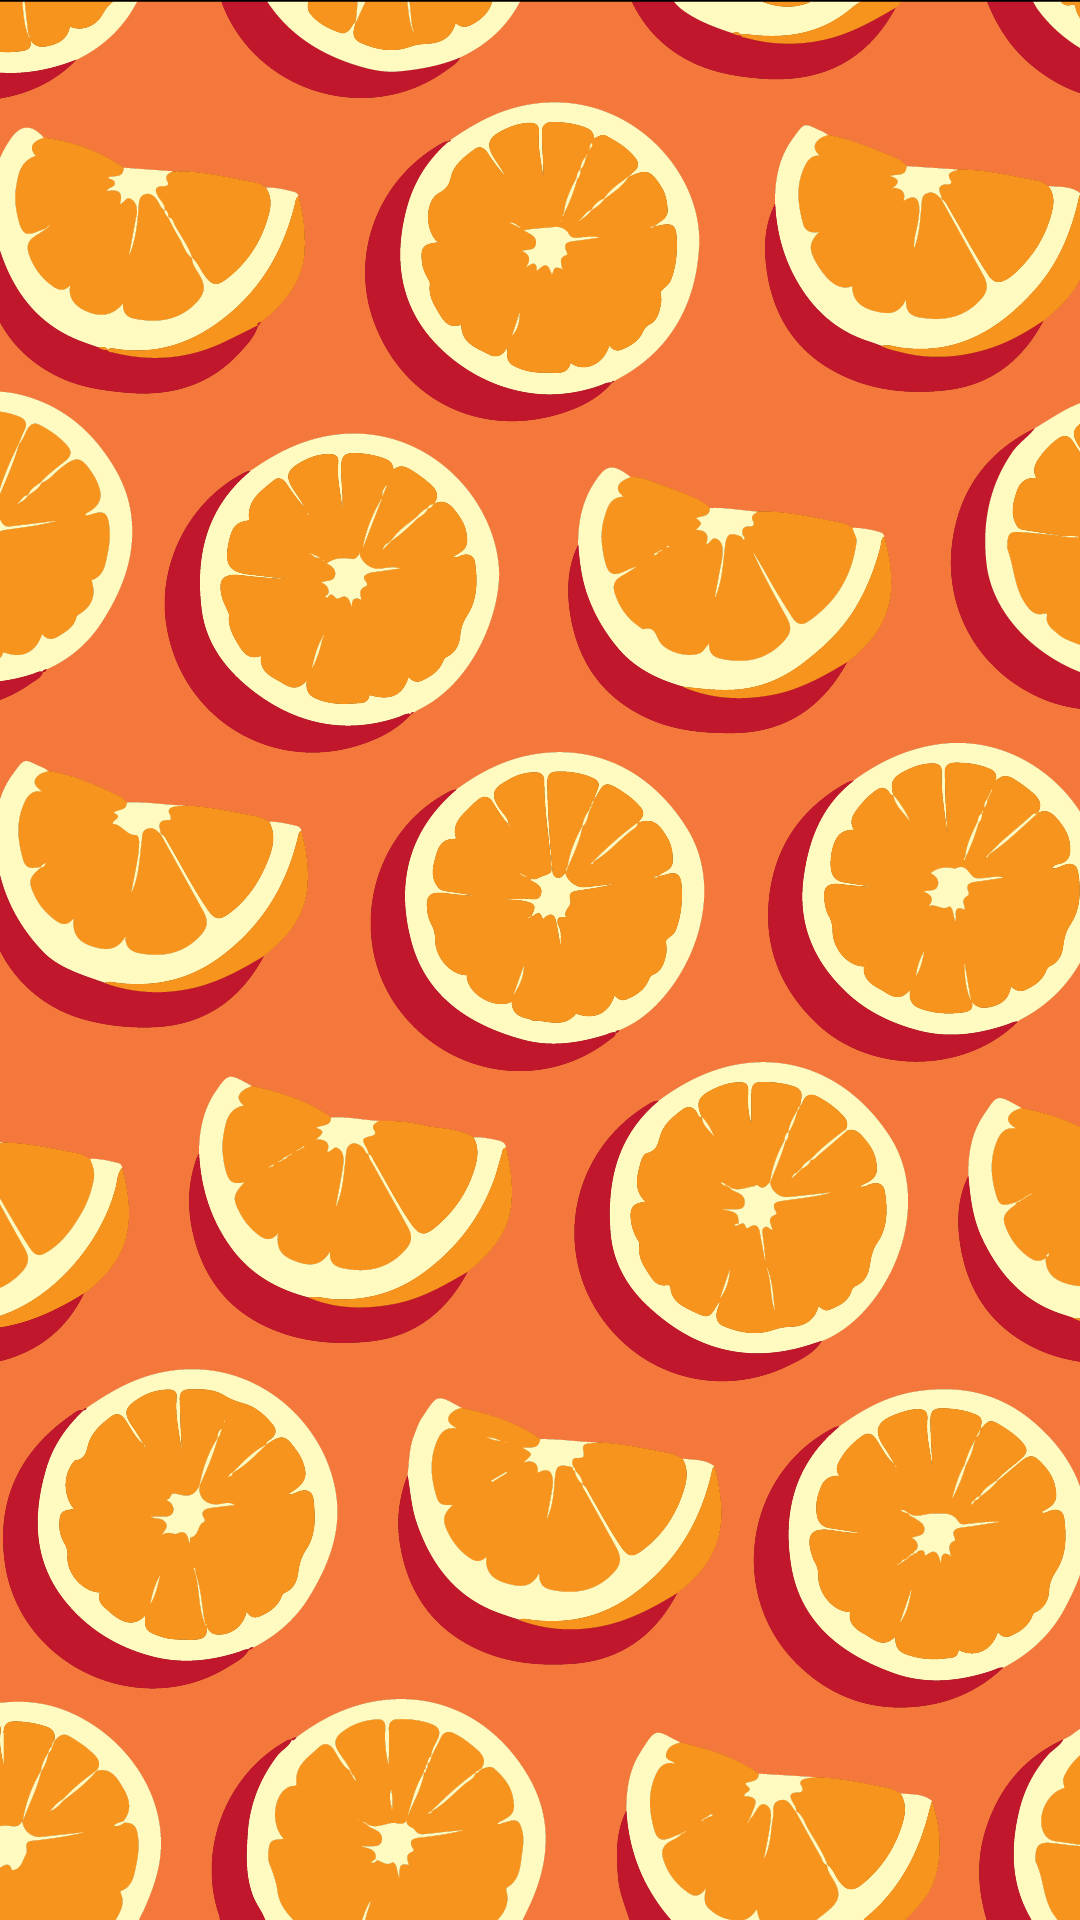 100+] Orange Phone Wallpapers | Wallpapers.com